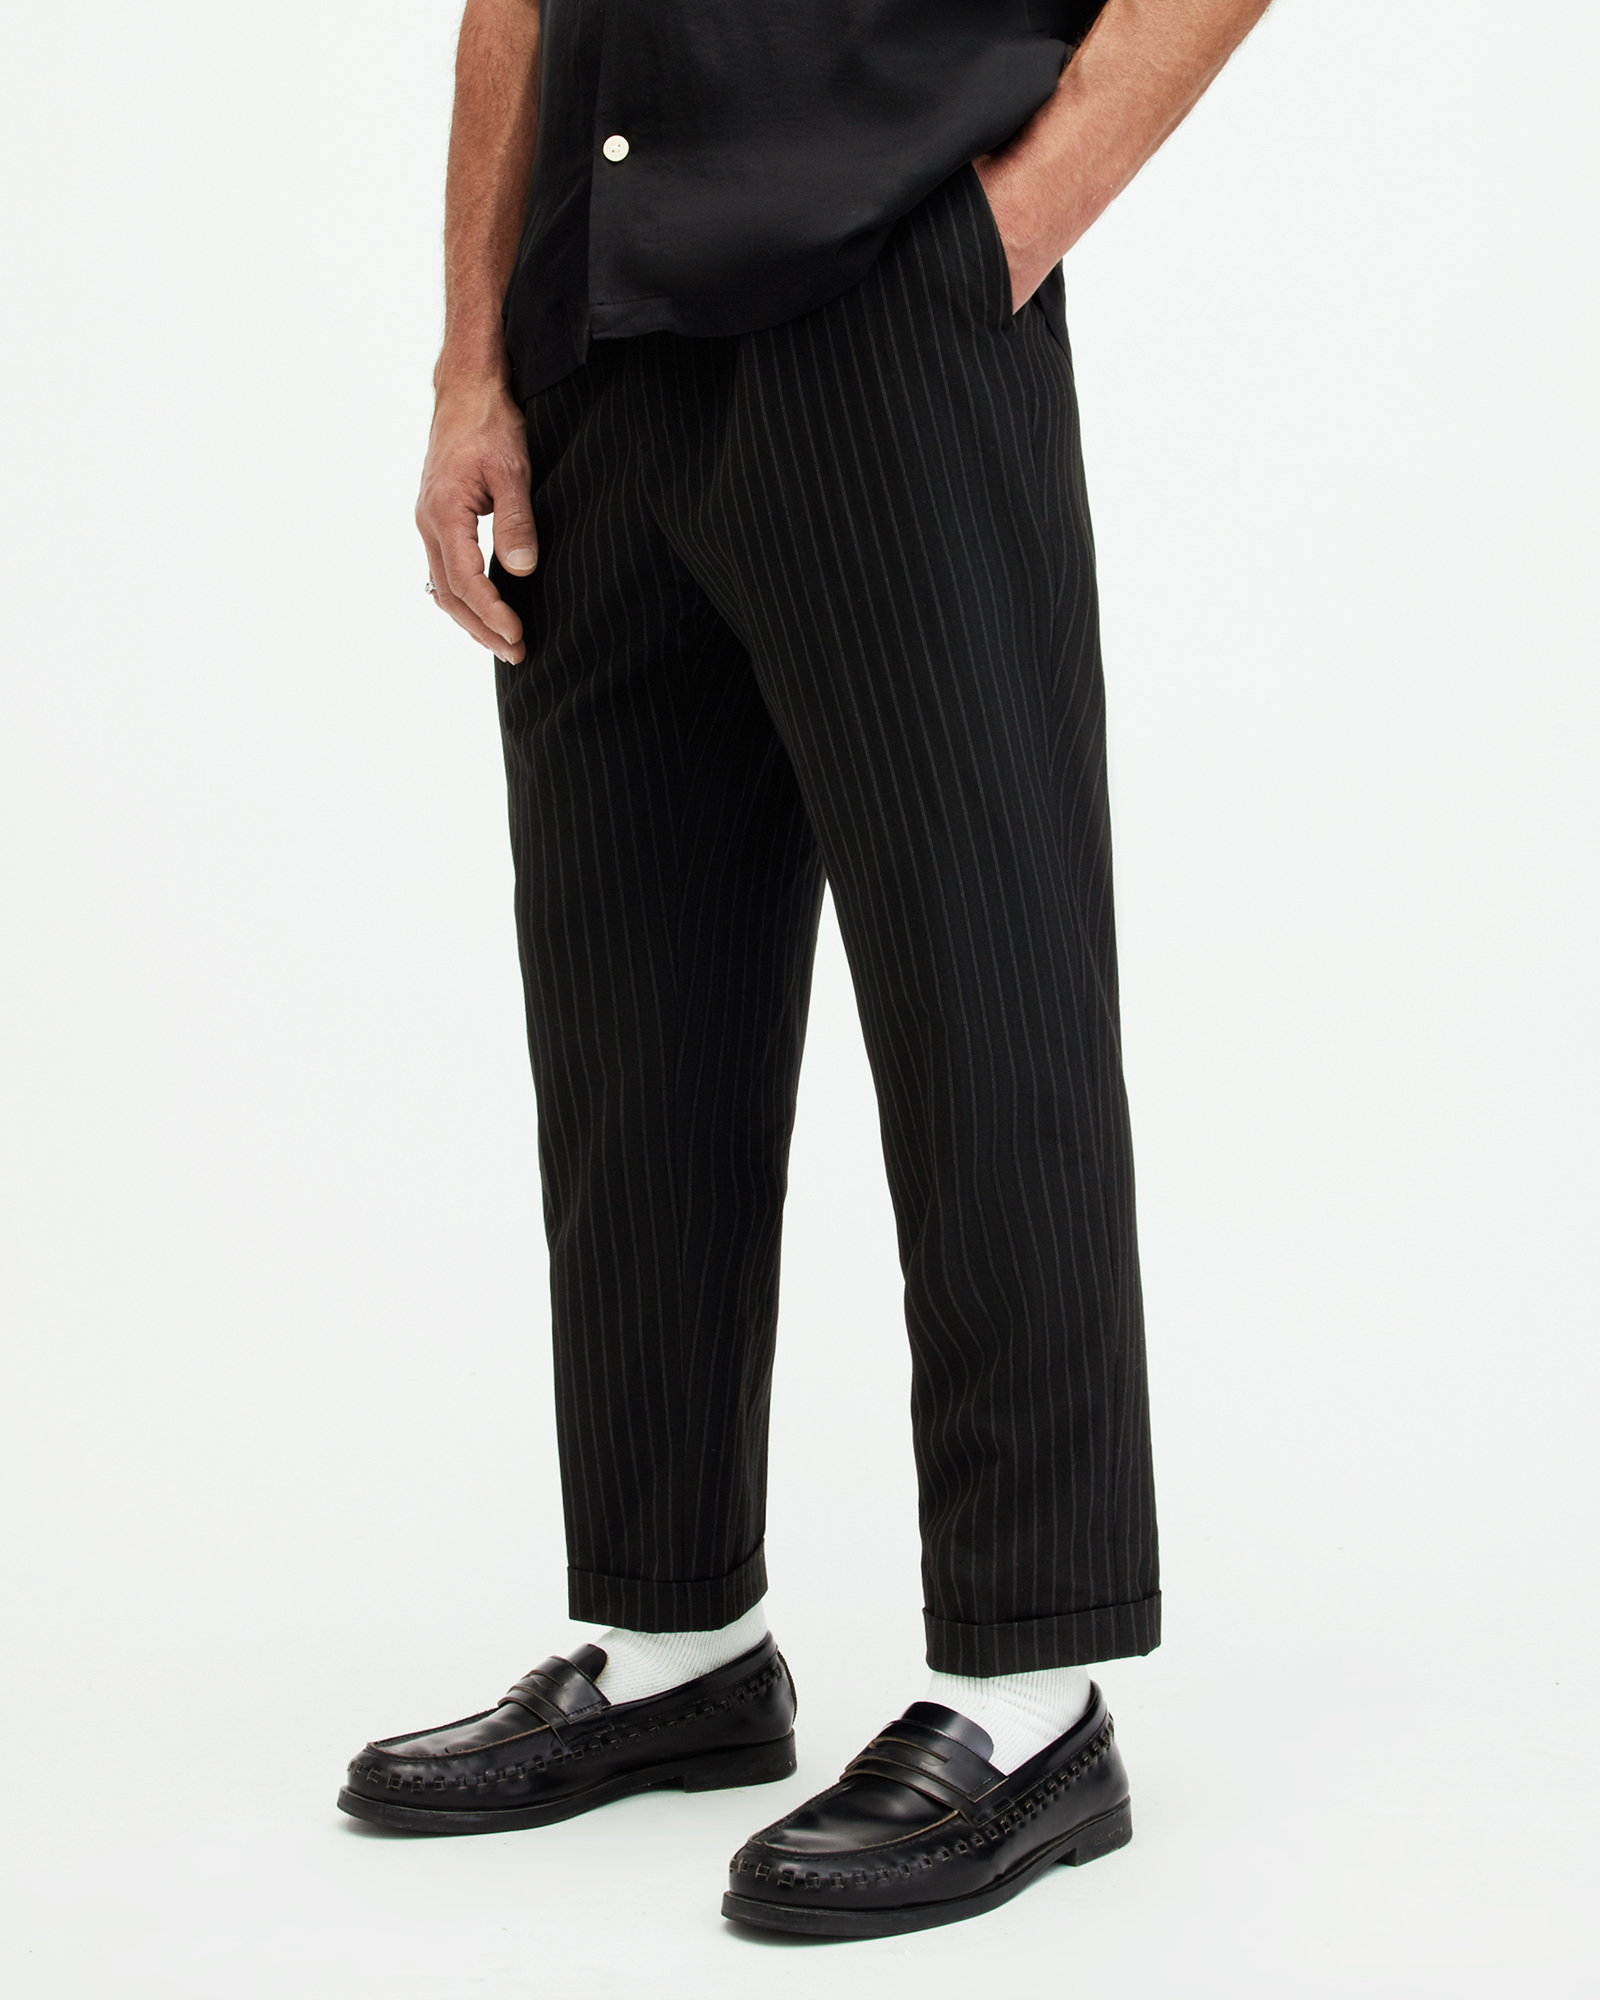 AllSaints Dice Tallis Slim Fit Cropped Trousers,, Black, Size: 32